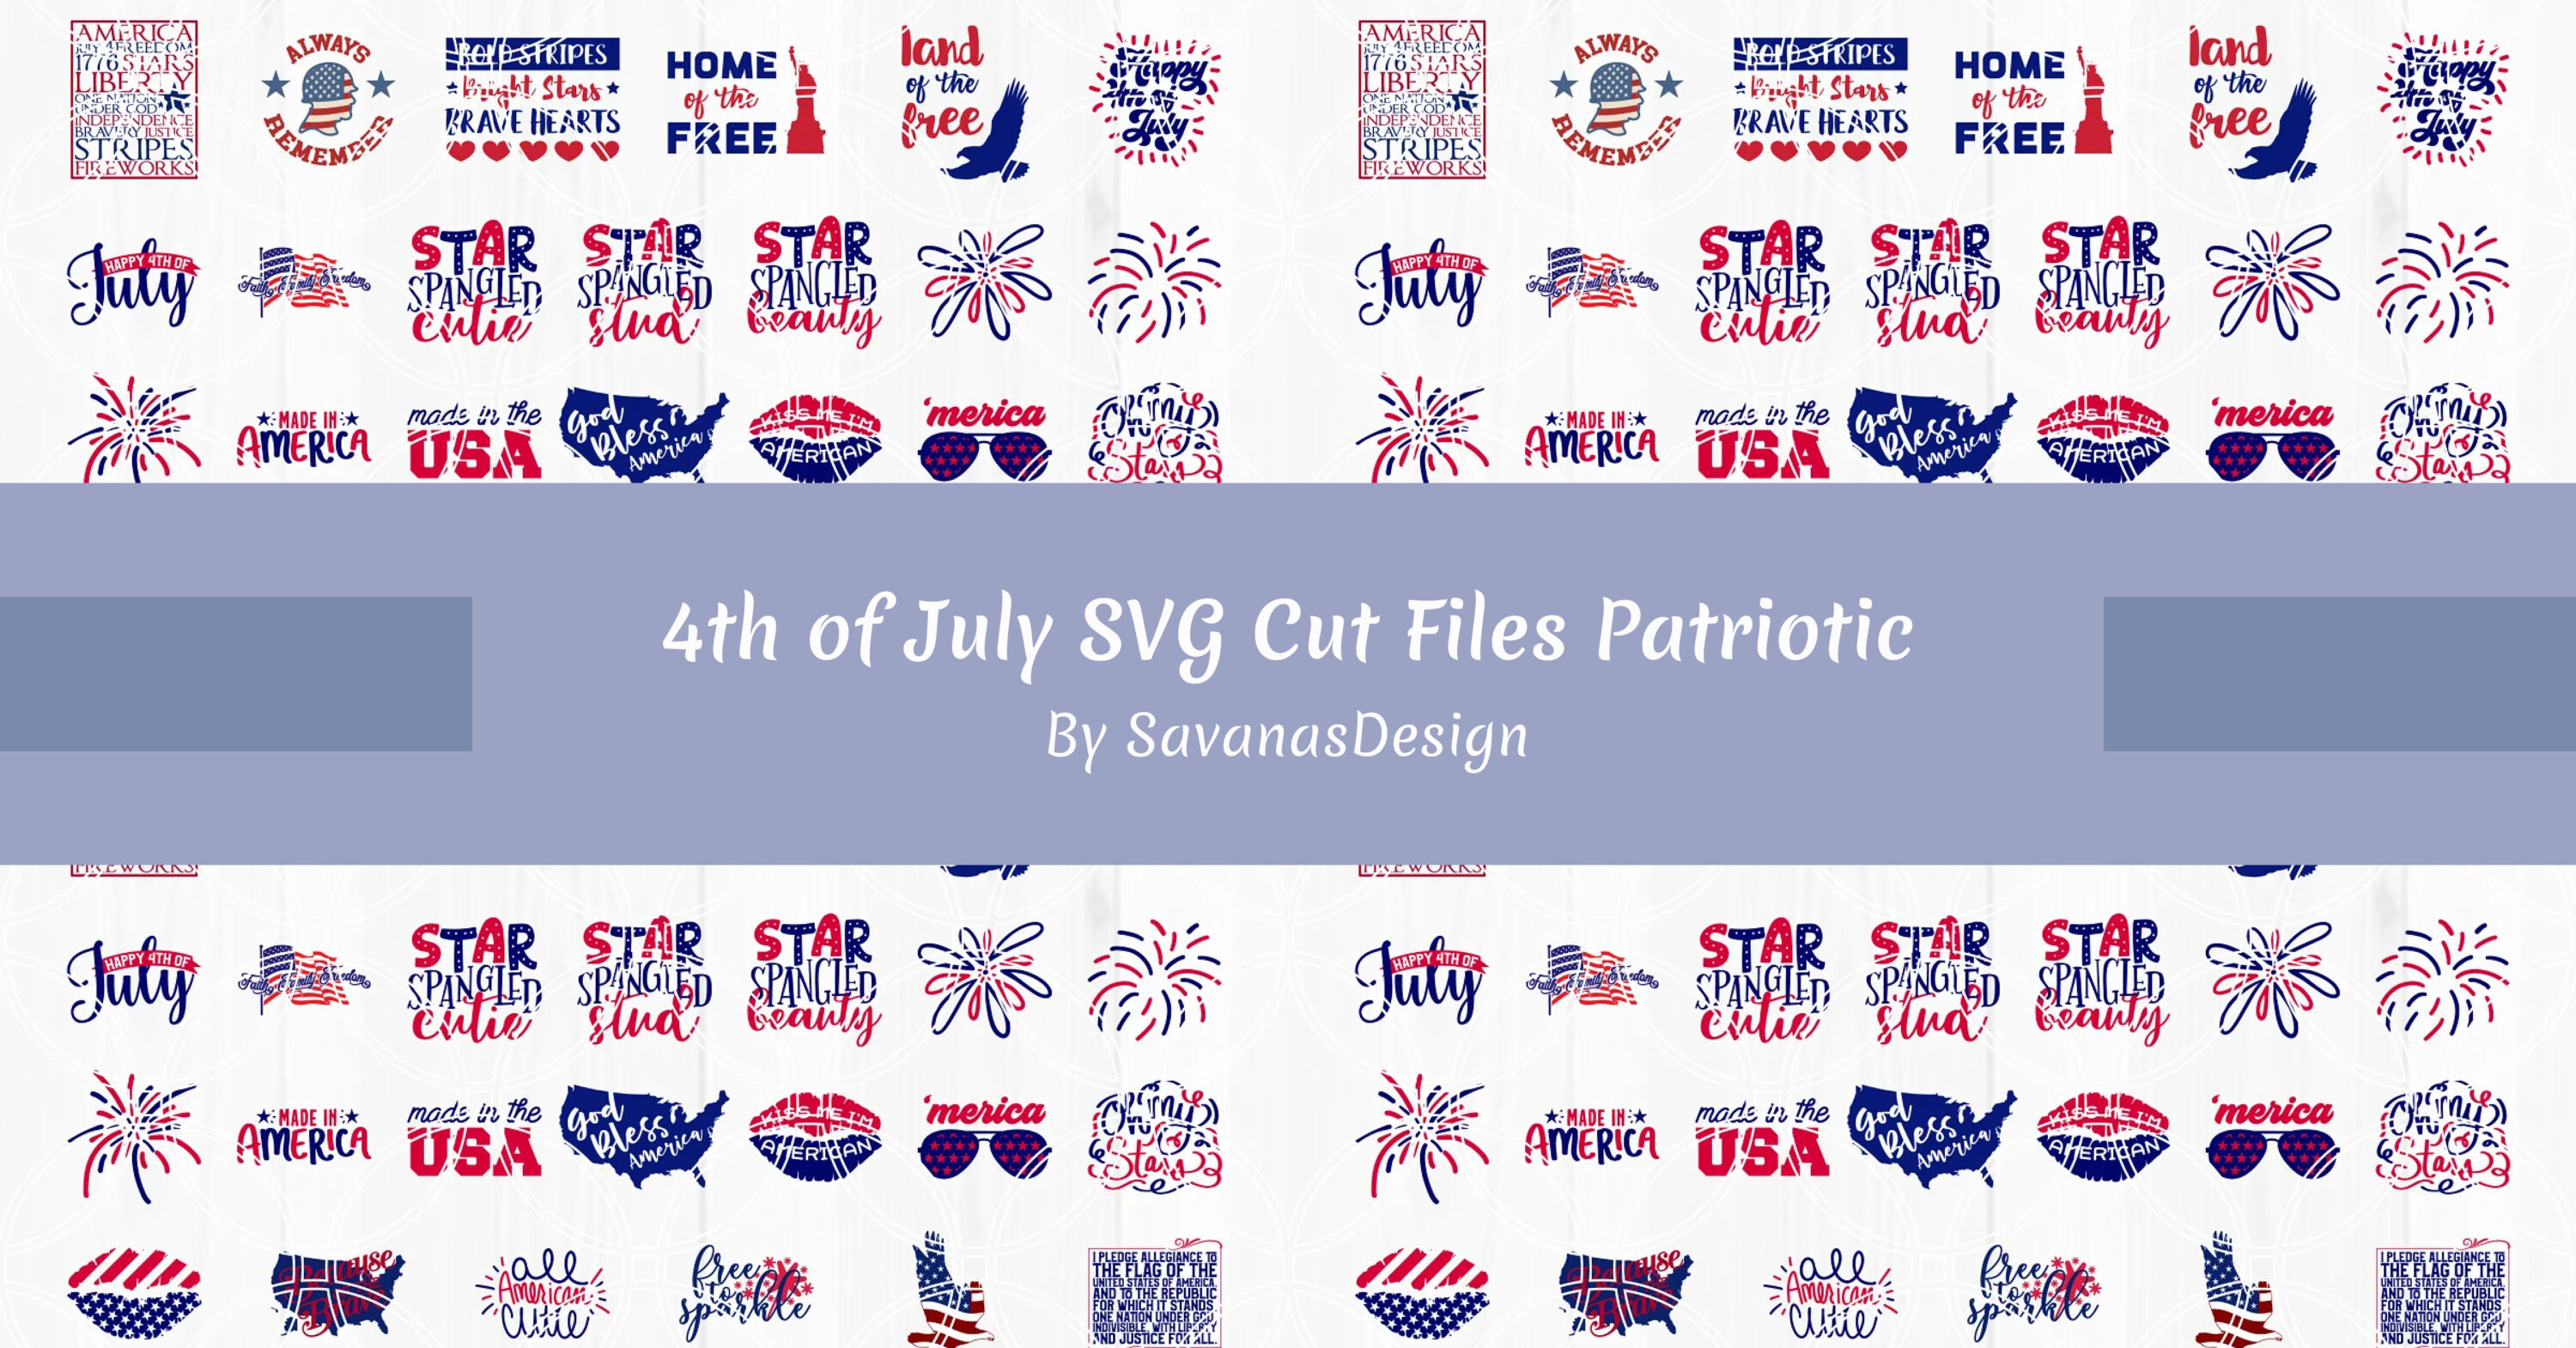 4th of July SVG Cut Files Patriotic facebook image.